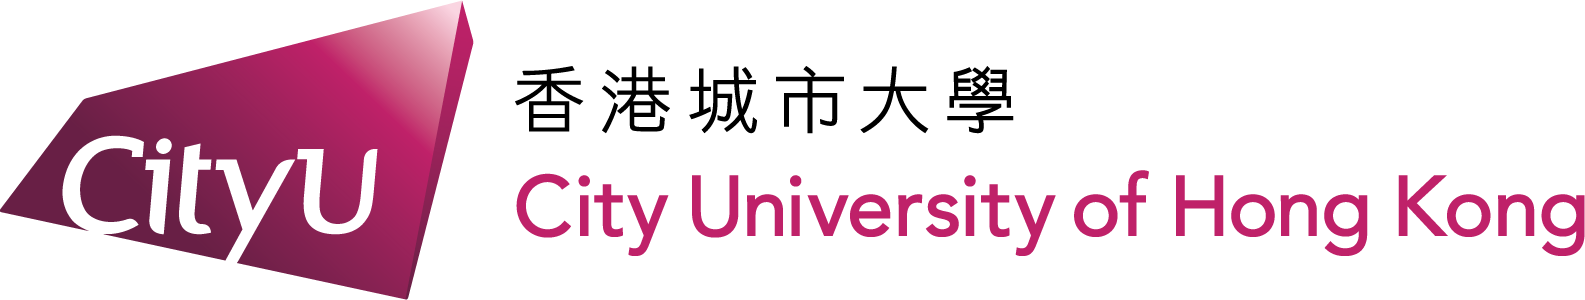 cityu logo